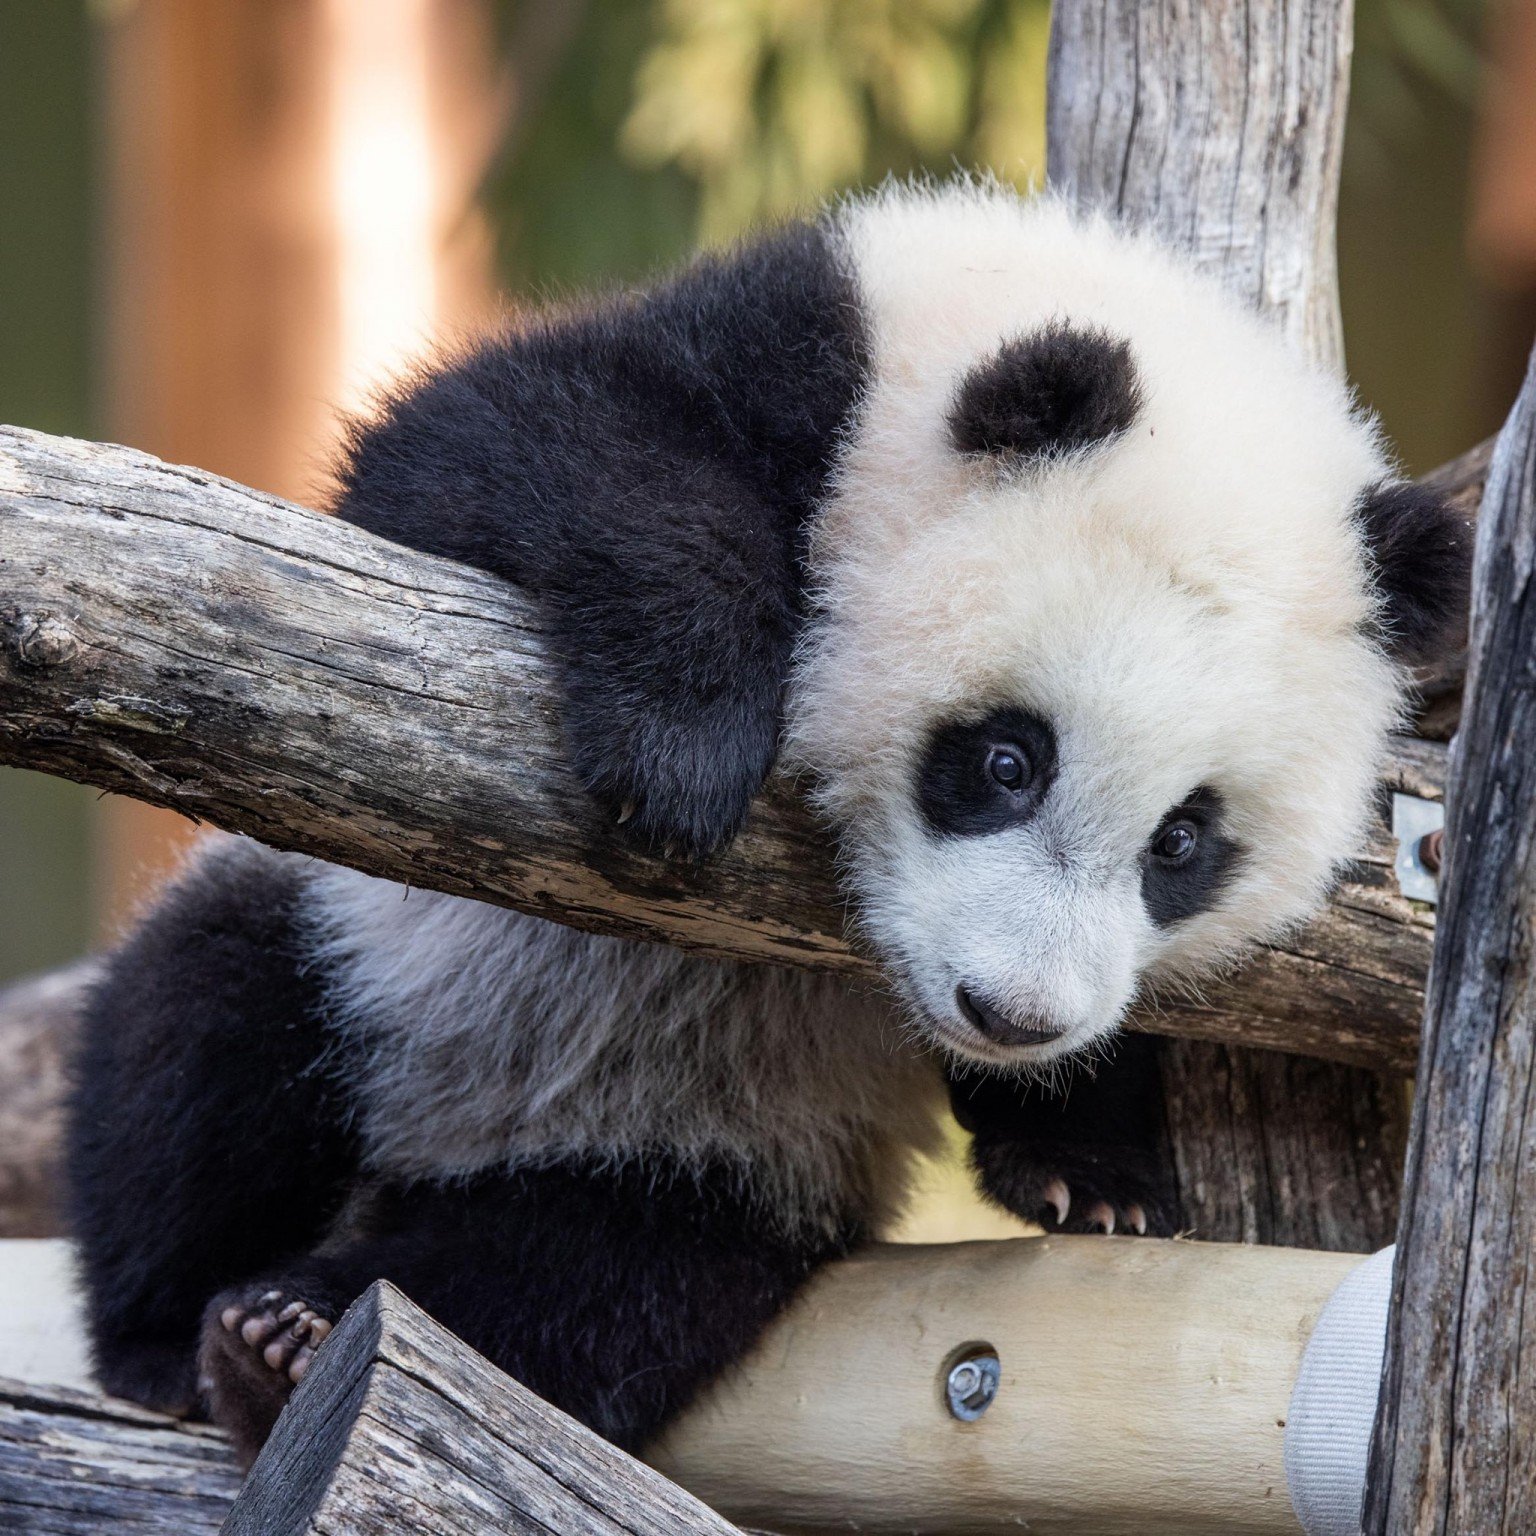 national zoo panda cam